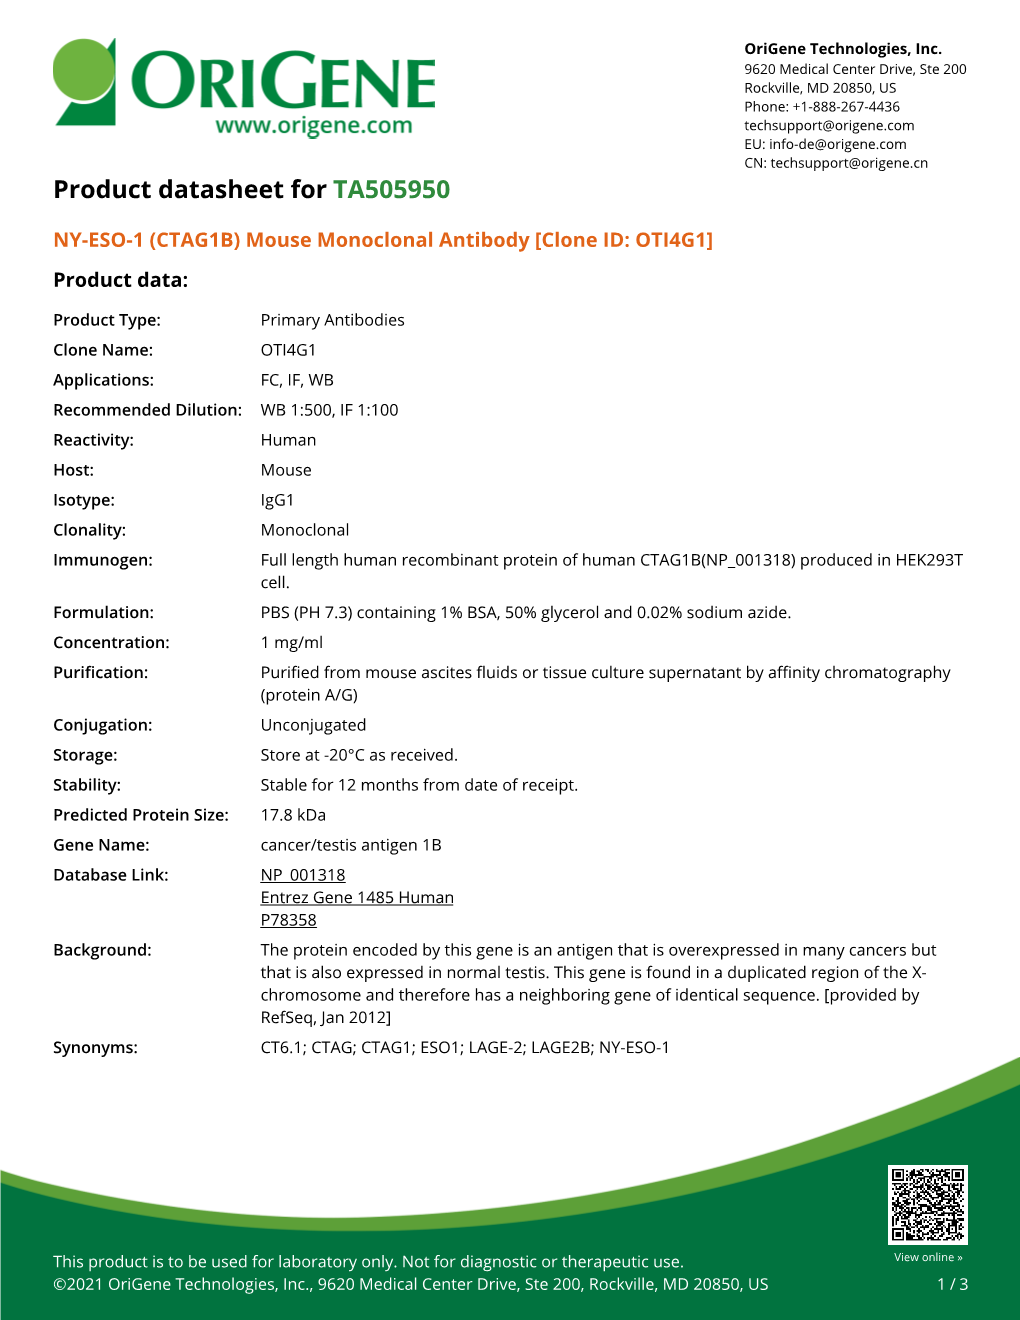 (CTAG1B) Mouse Monoclonal Antibody [Clone ID: OTI4G1] Product Data